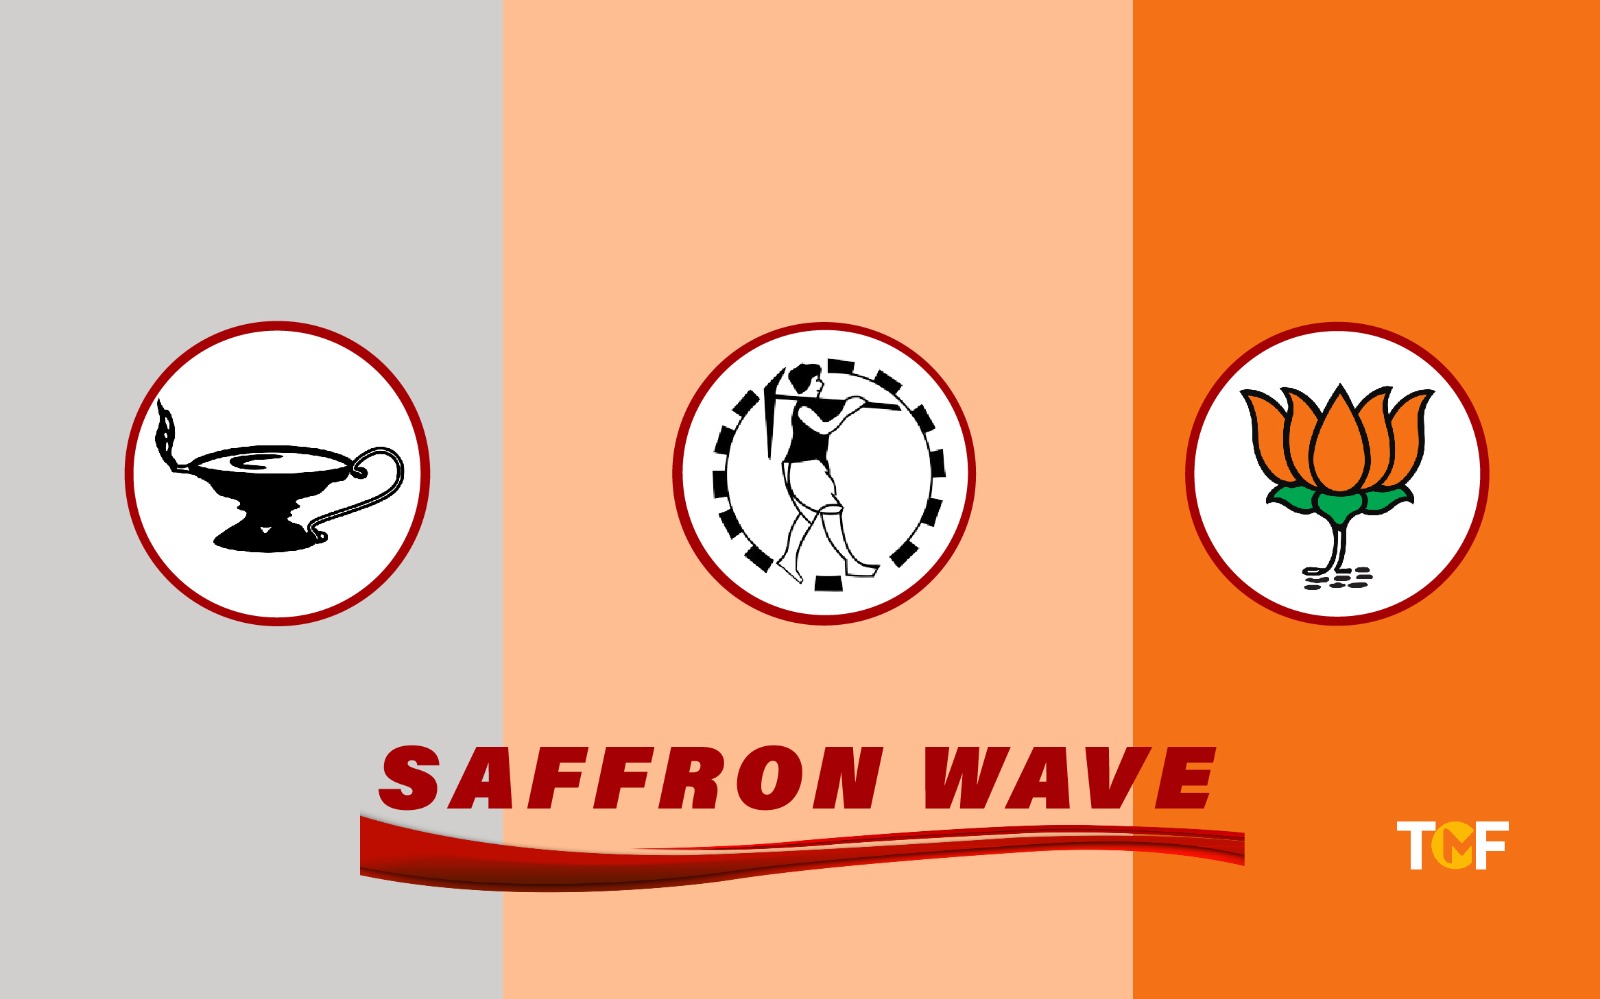 Top five pillars of India’s saffron wave (1920s-1990)